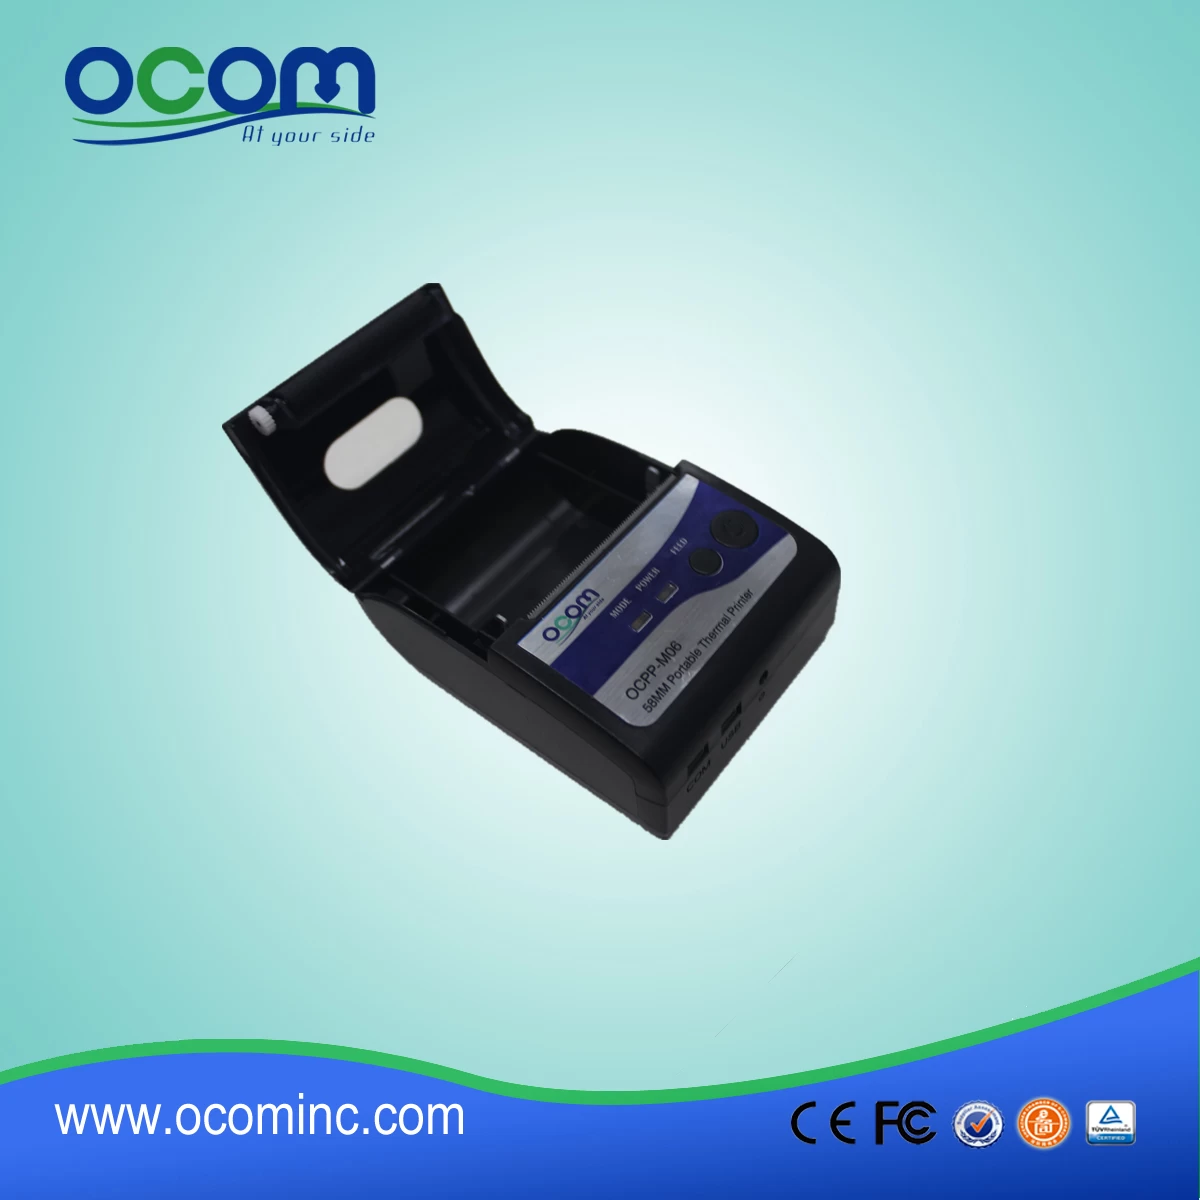 58mm mini portable handheld printer made in China (OCPP-M06)